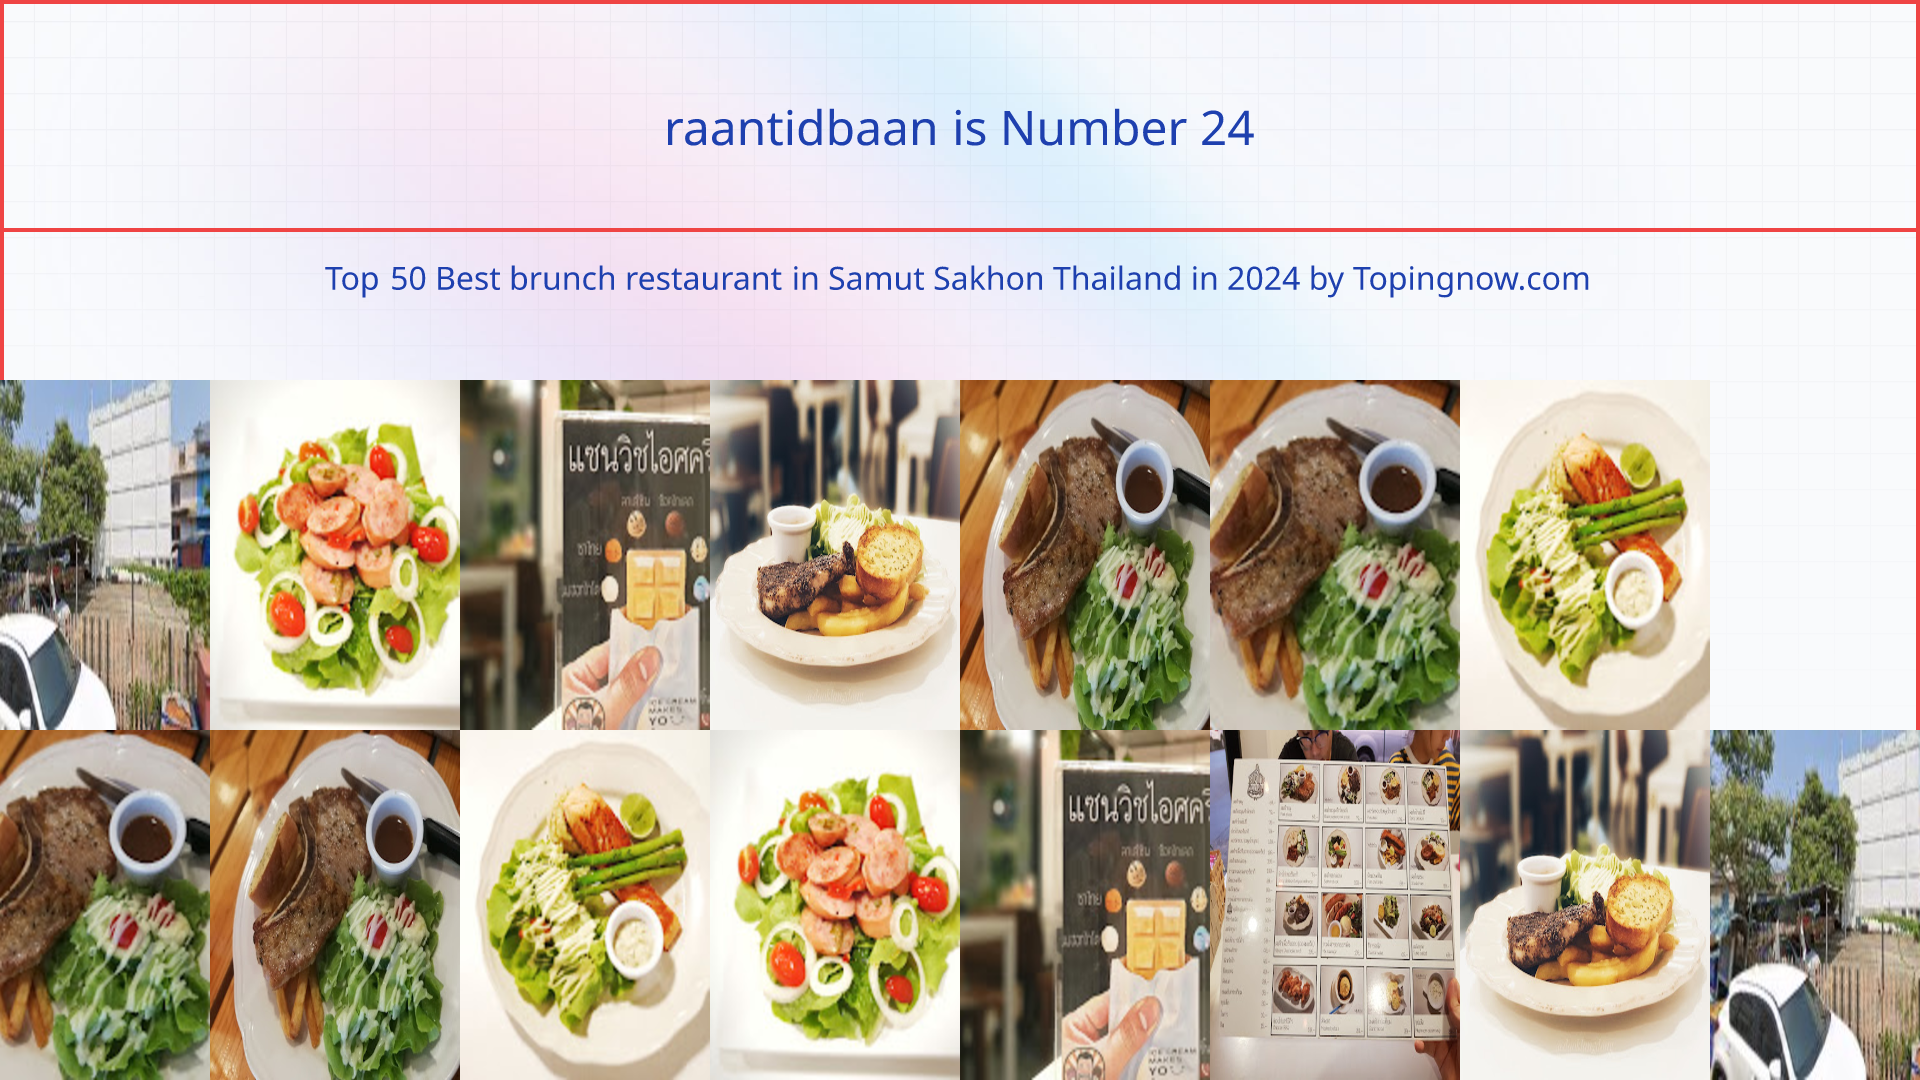 raantidbaan: Top 50 Best brunch restaurant in Samut Sakhon Thailand in 2024